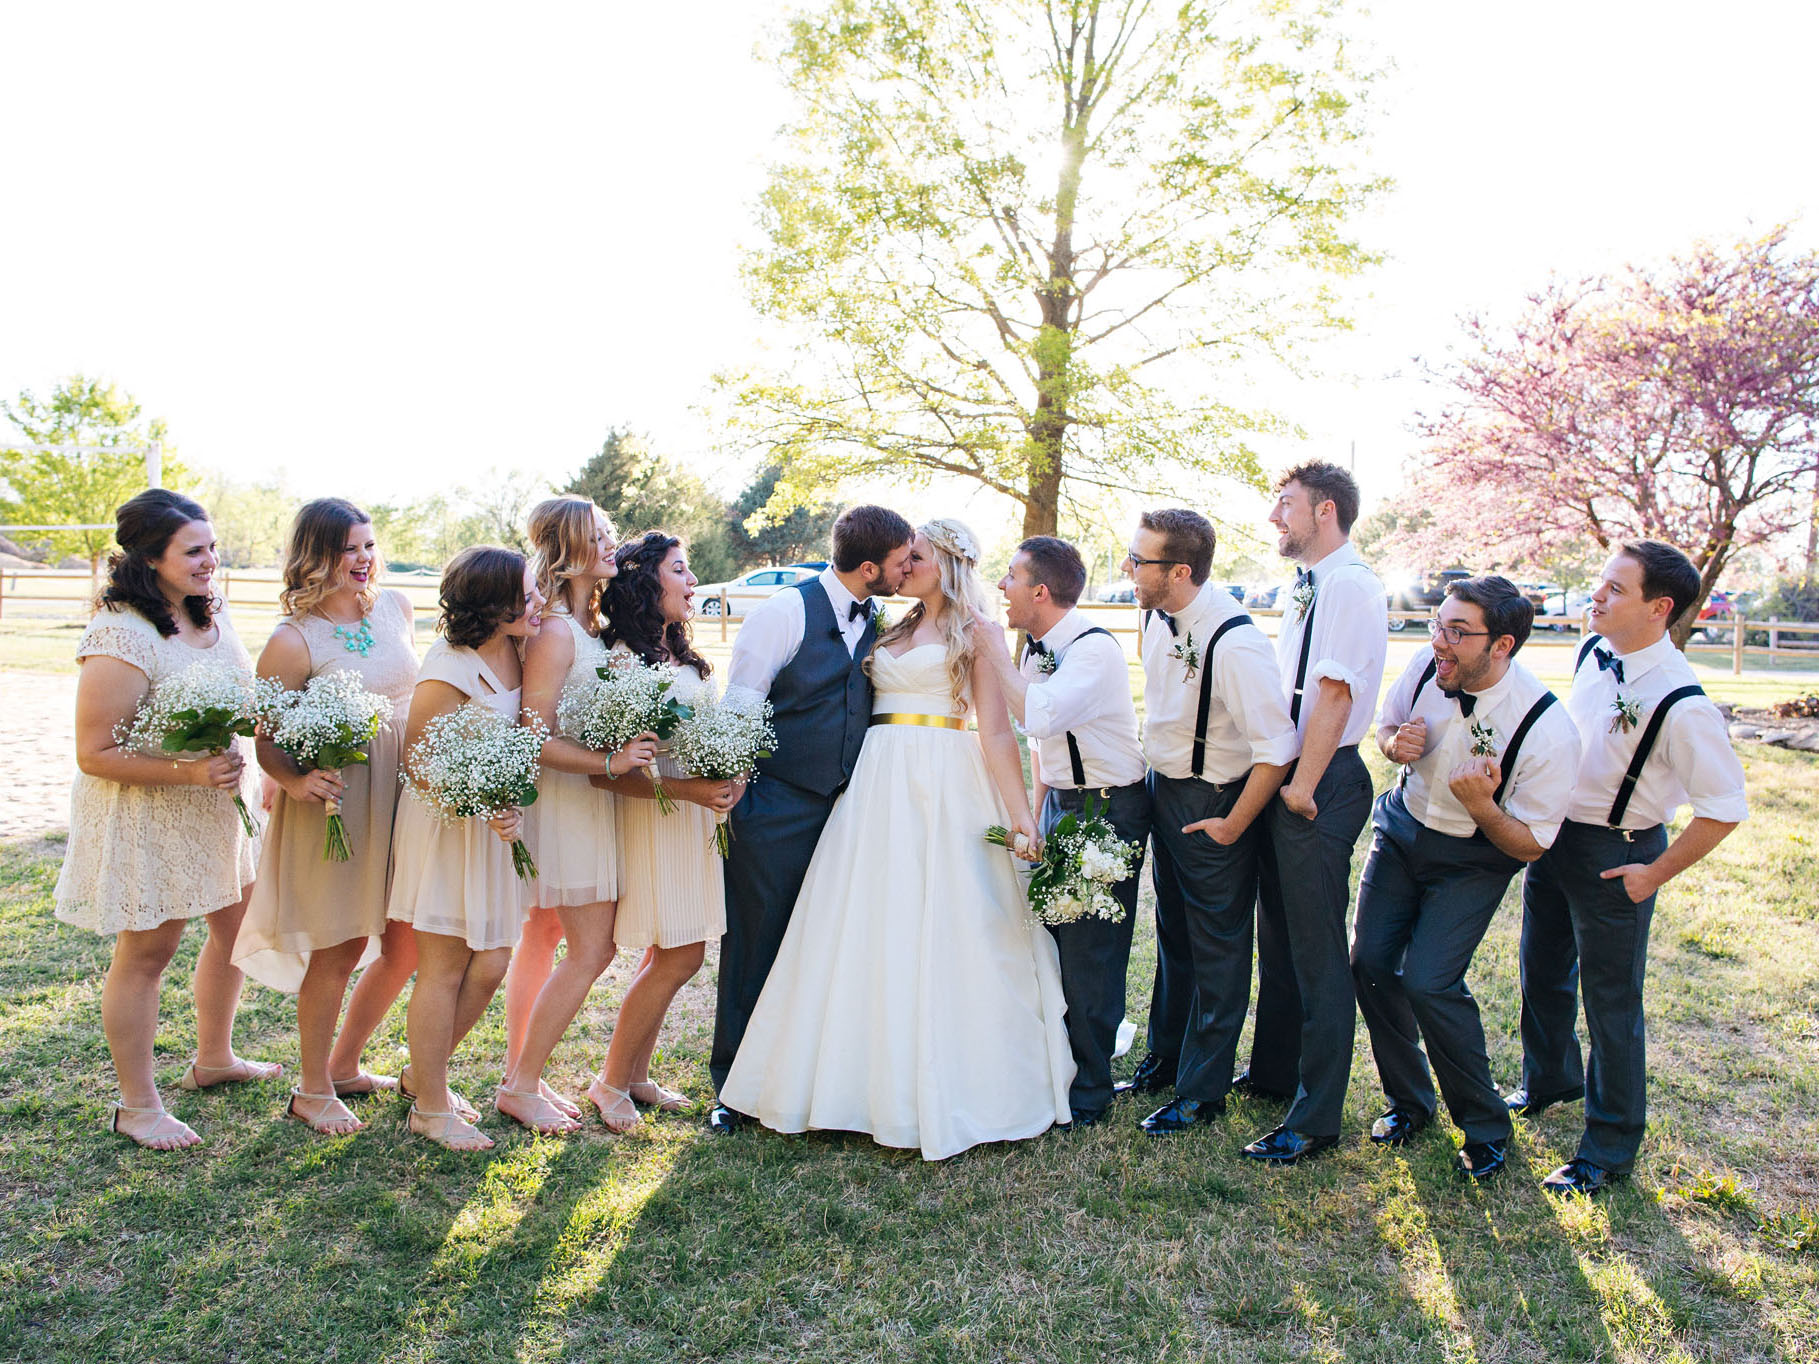 Eberly Farm Wedding // Caitlin + Josh